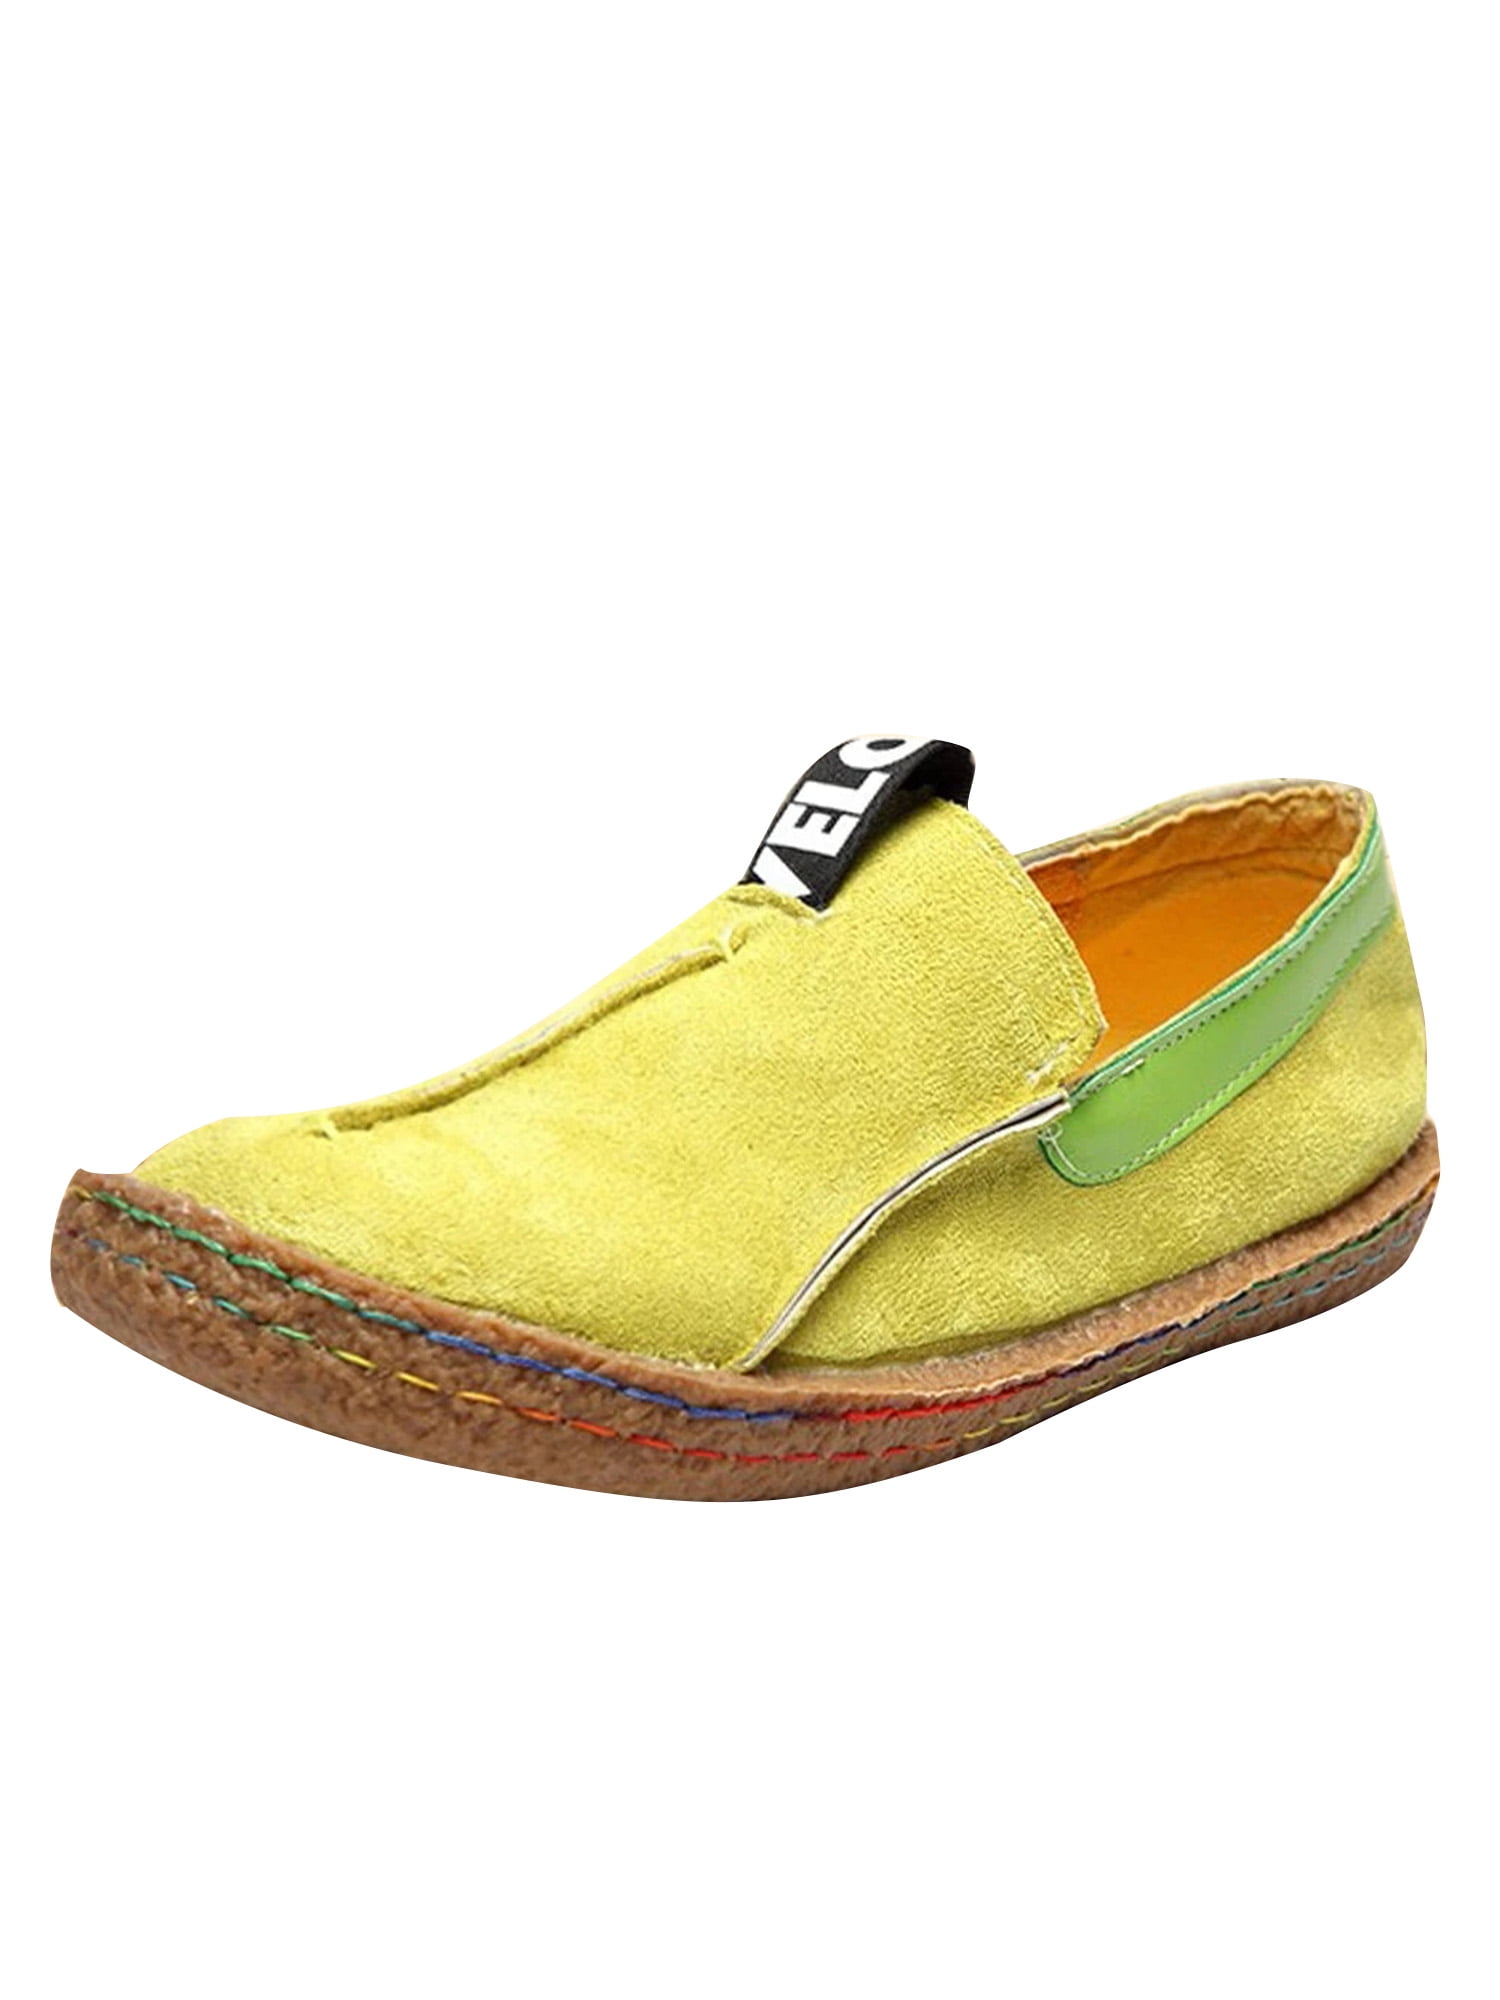 UKAP Women Espadrilles Slip On Shoes Summer Casual Flat Boat Shoes - Walmart.com